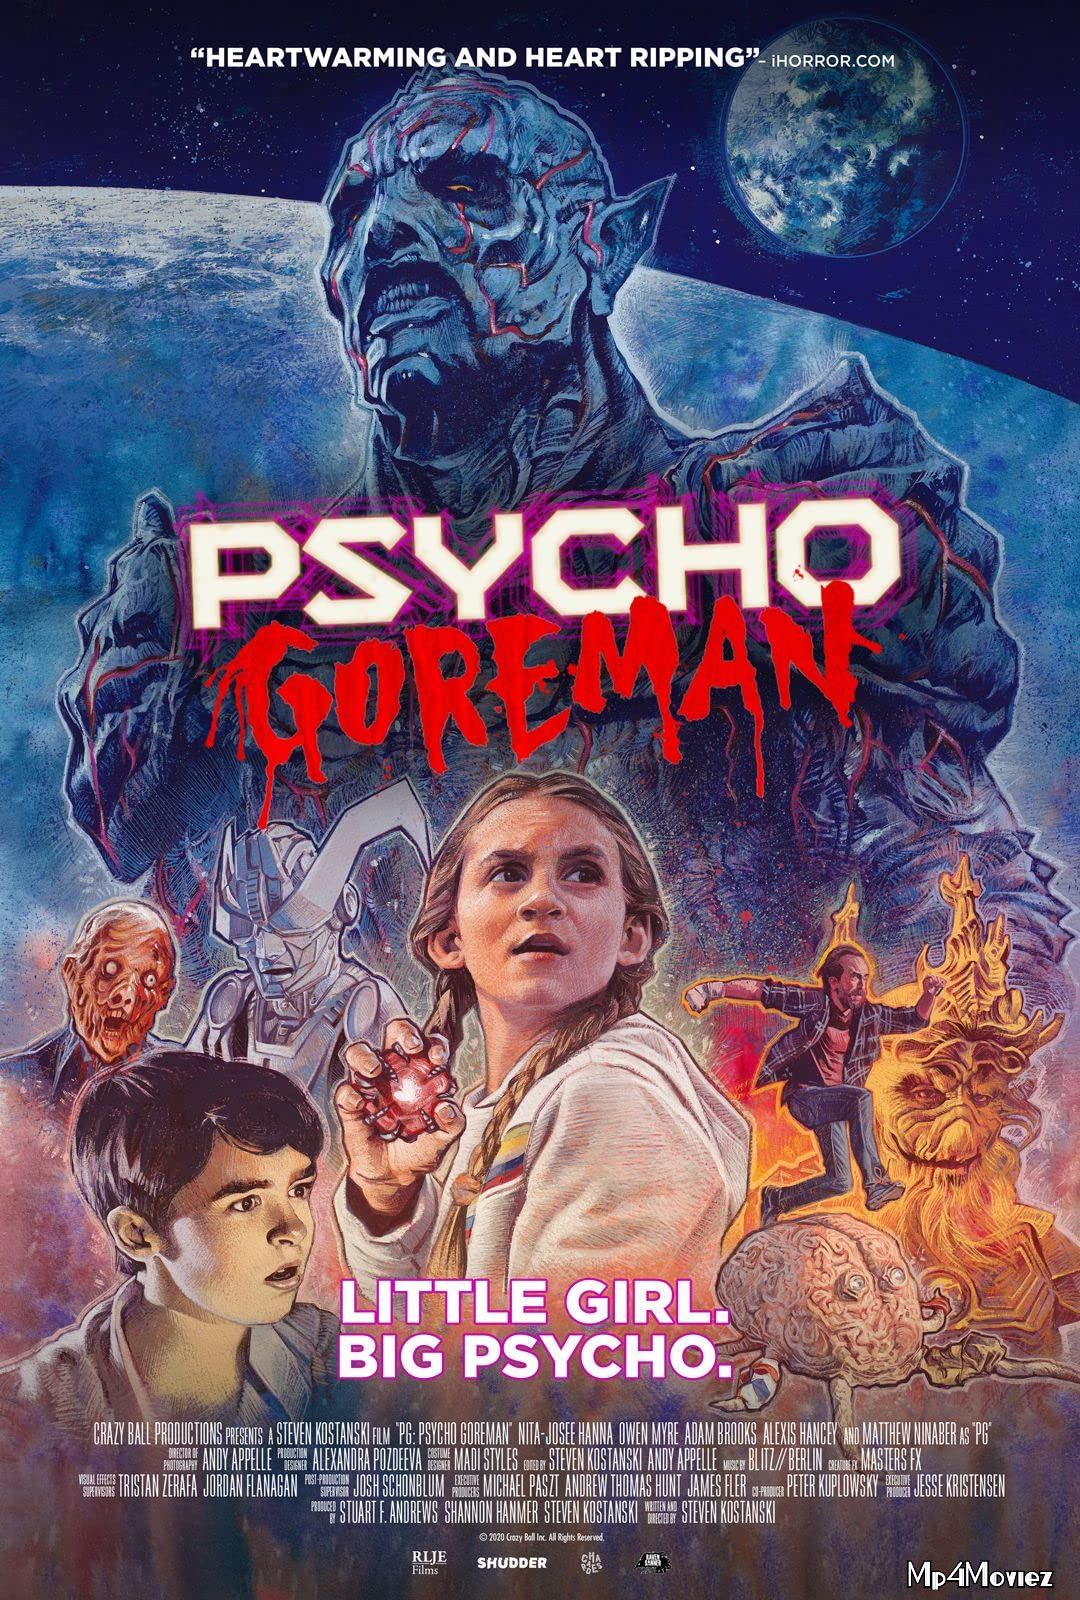 Psycho Goreman (2021) English HDRip download full movie